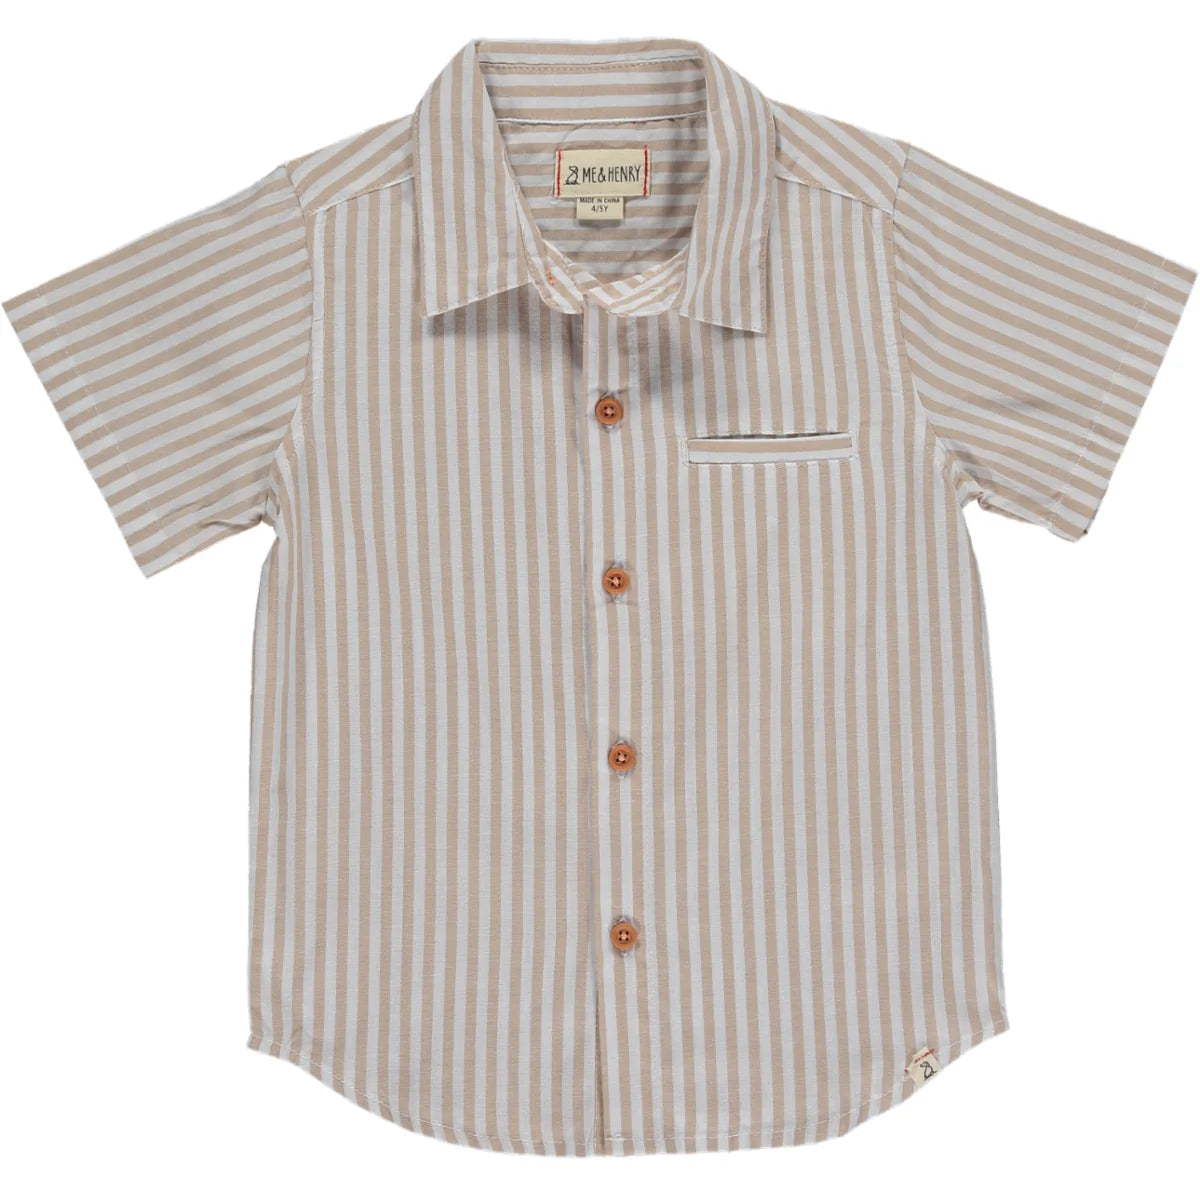 Me & Henry Beige & White | Newport Woven Stripe Shirt